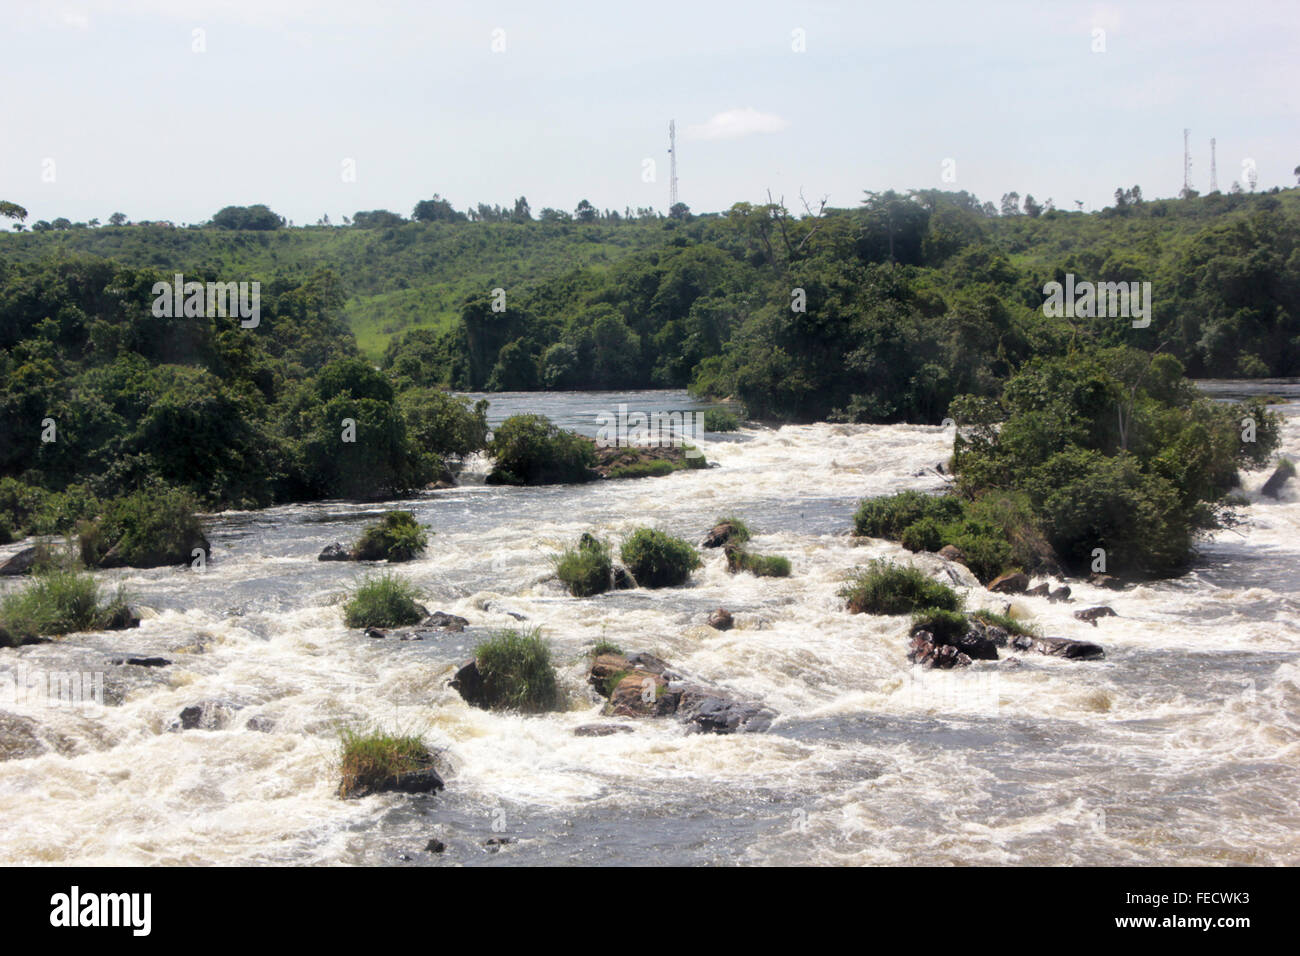 River Nile water flows through Karuma Falls on its way to Egypt in northern Uganda Stock Photo